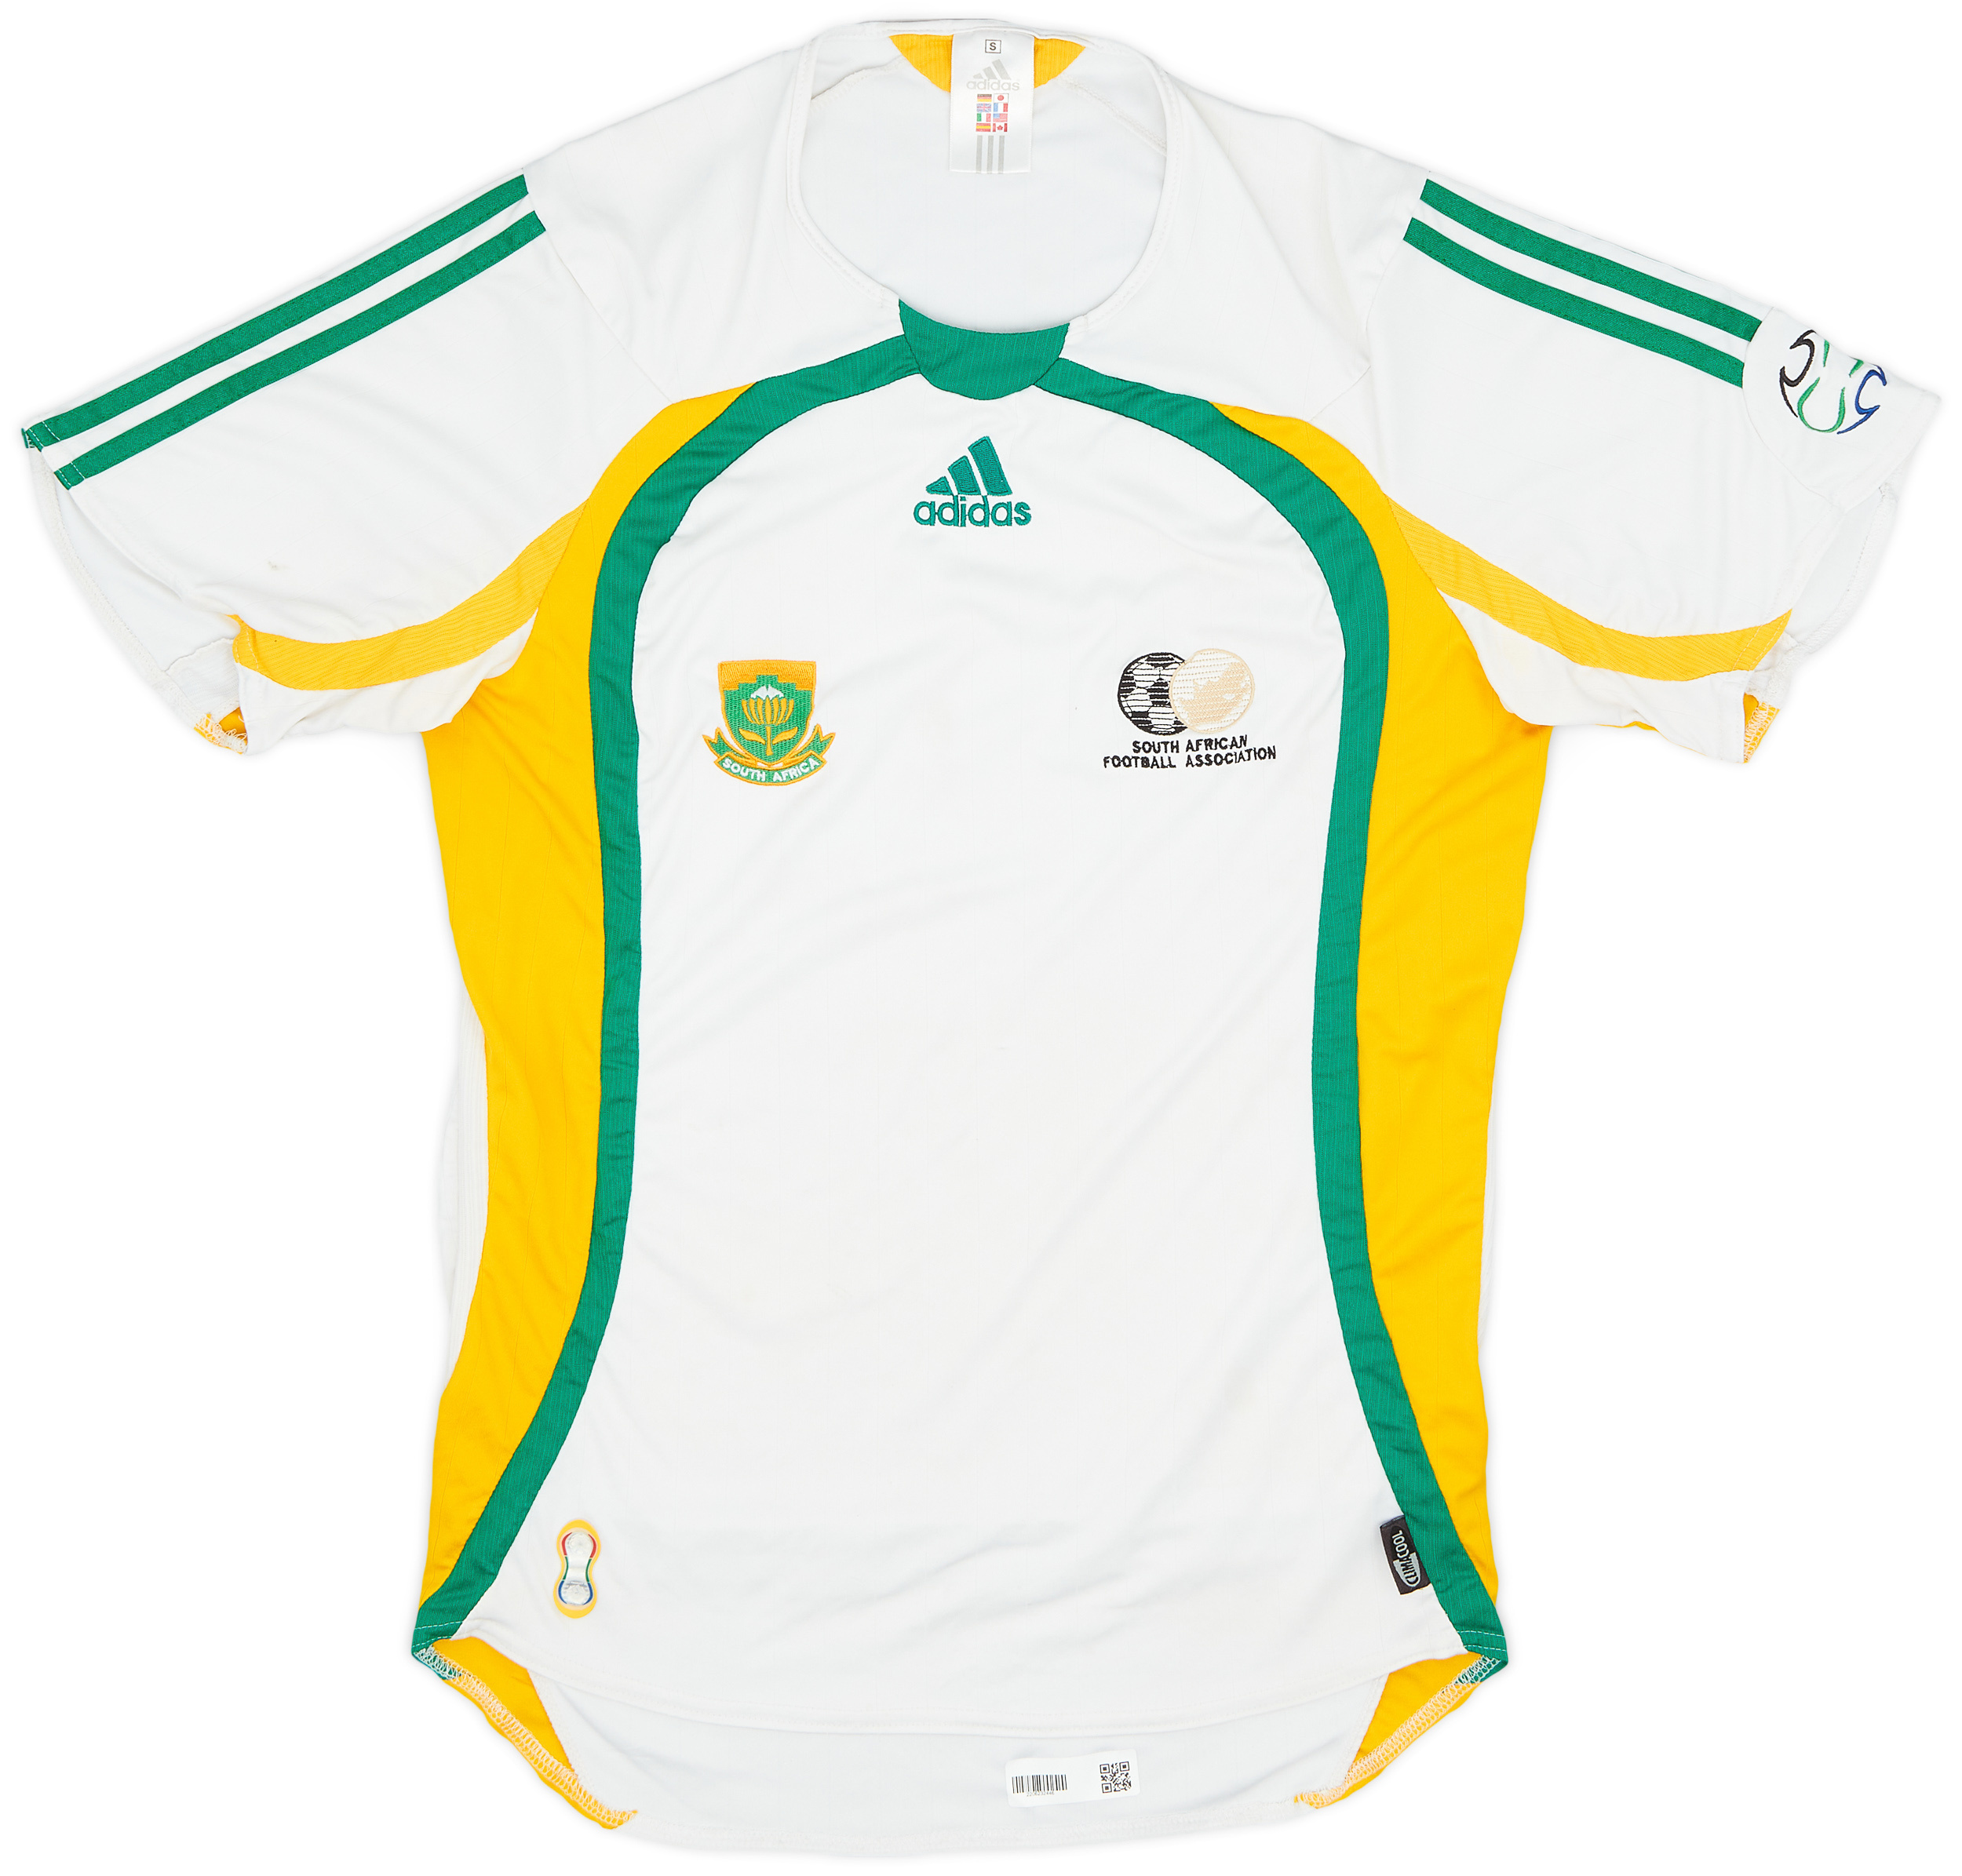 2006-08 South Africa Away Shirt - 6/10 - ()